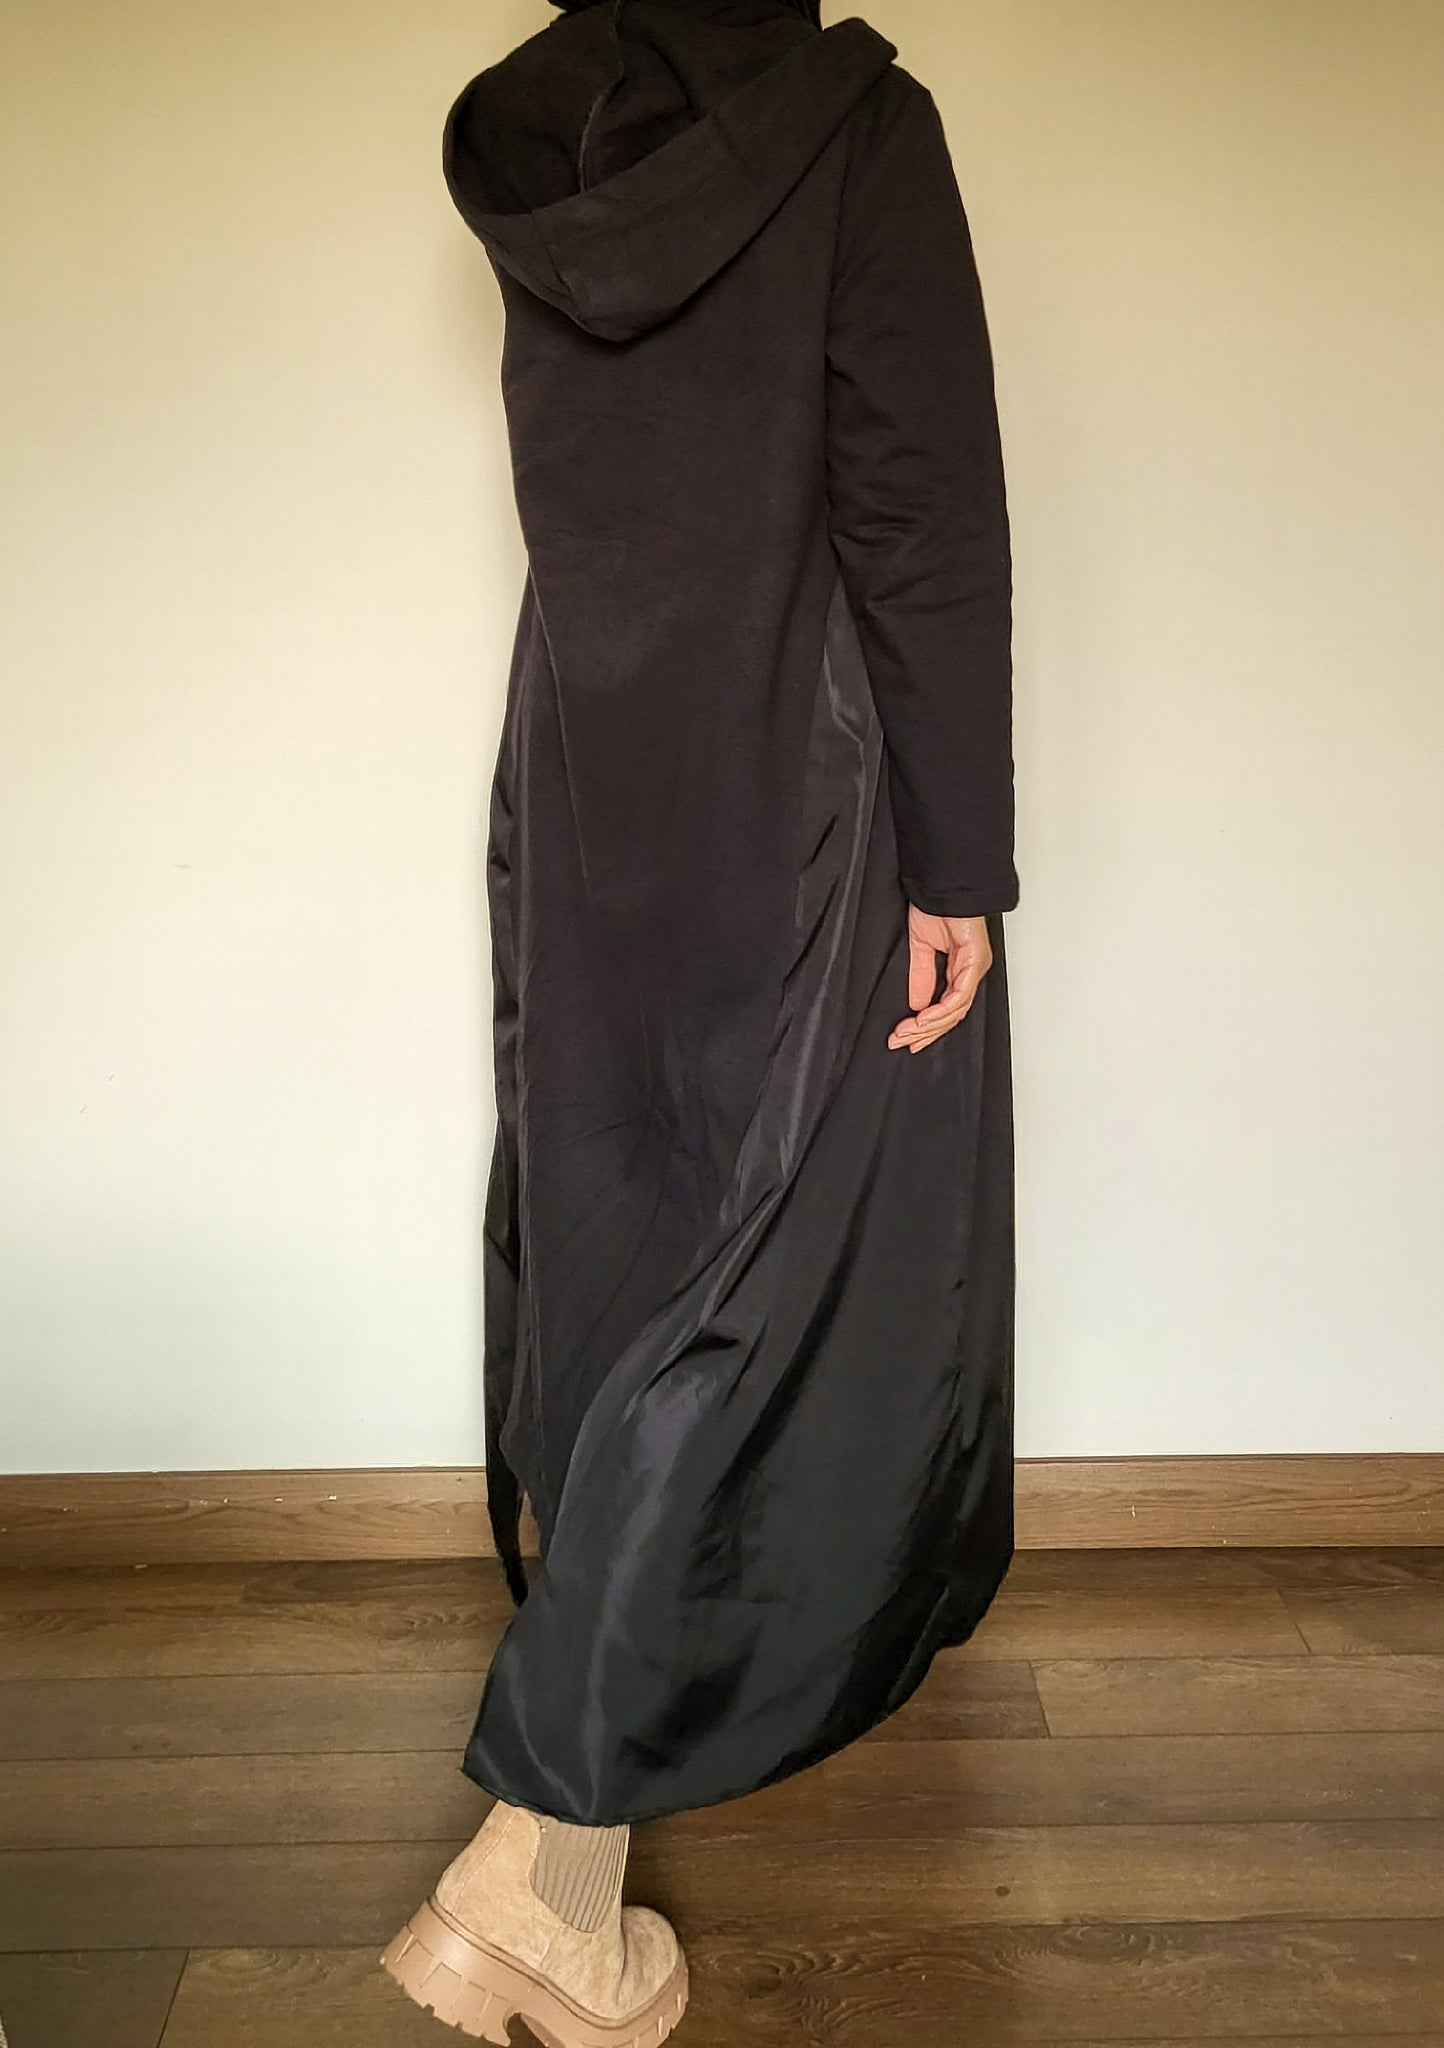 The hooded black dress